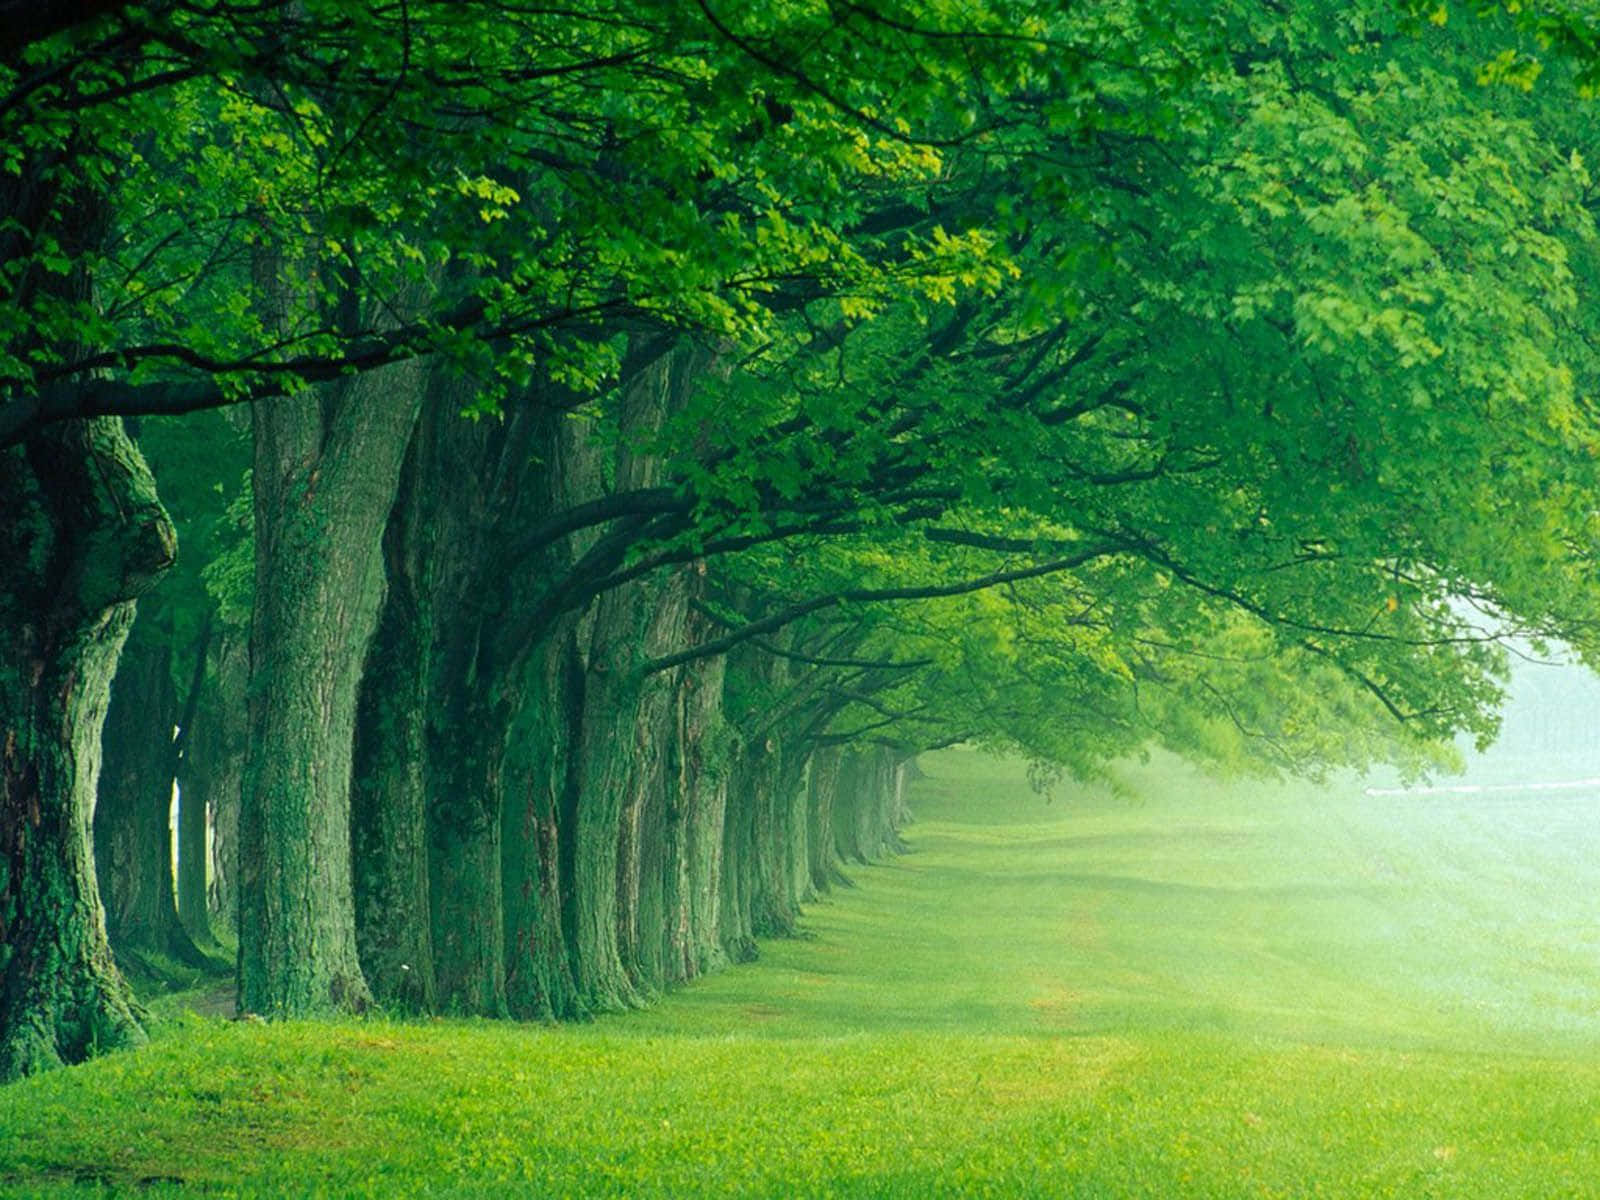 Unfrondoso Árbol Rodeado De Exuberante Vegetación Verde En Un Hermoso Entorno Al Aire Libre.